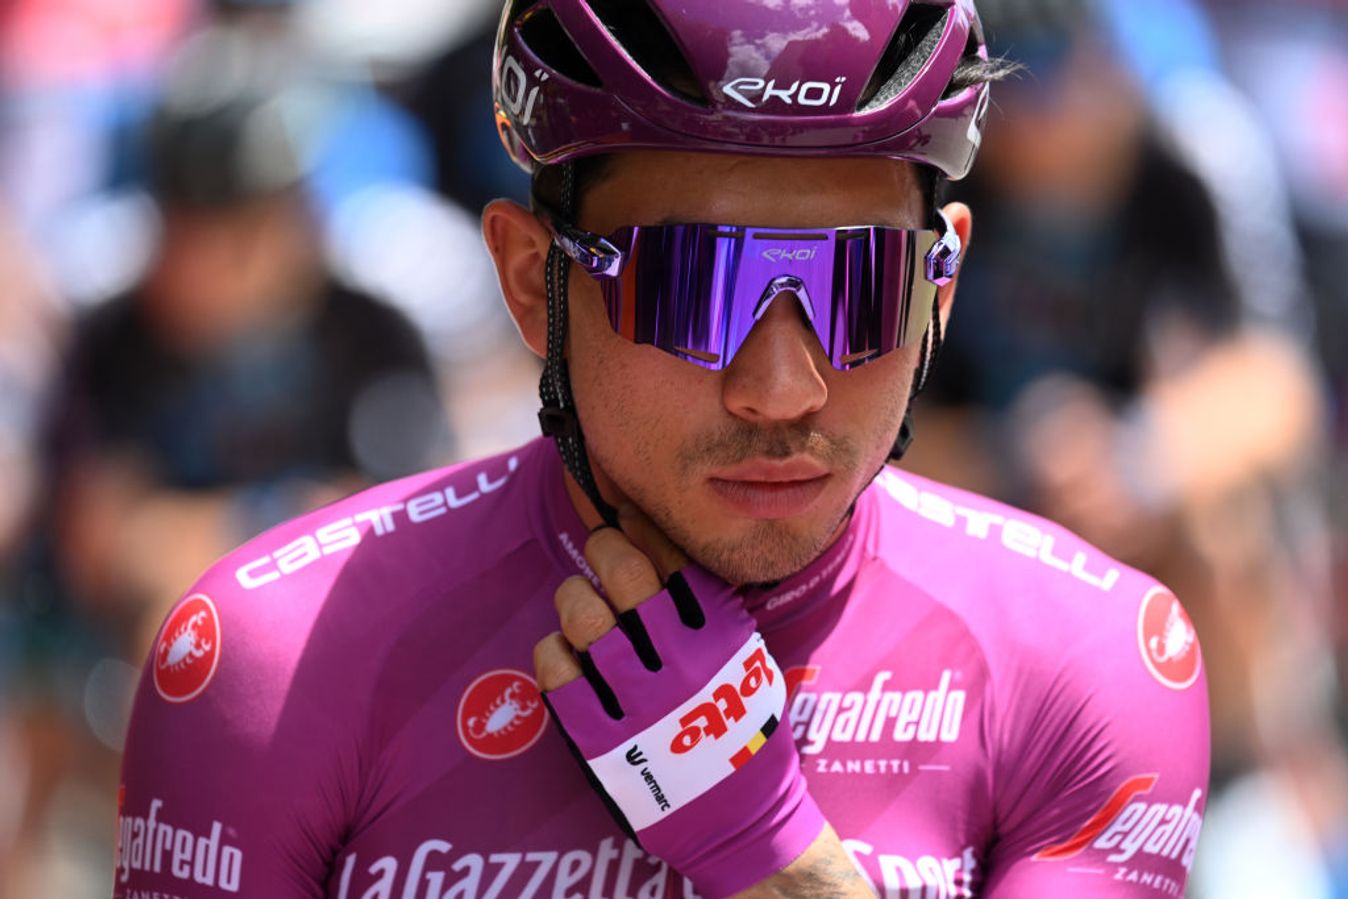 Caleb Ewan wore the ciclamino jersey at the 2021 Giro d'Italia - scene of his last Grand Tour stage win